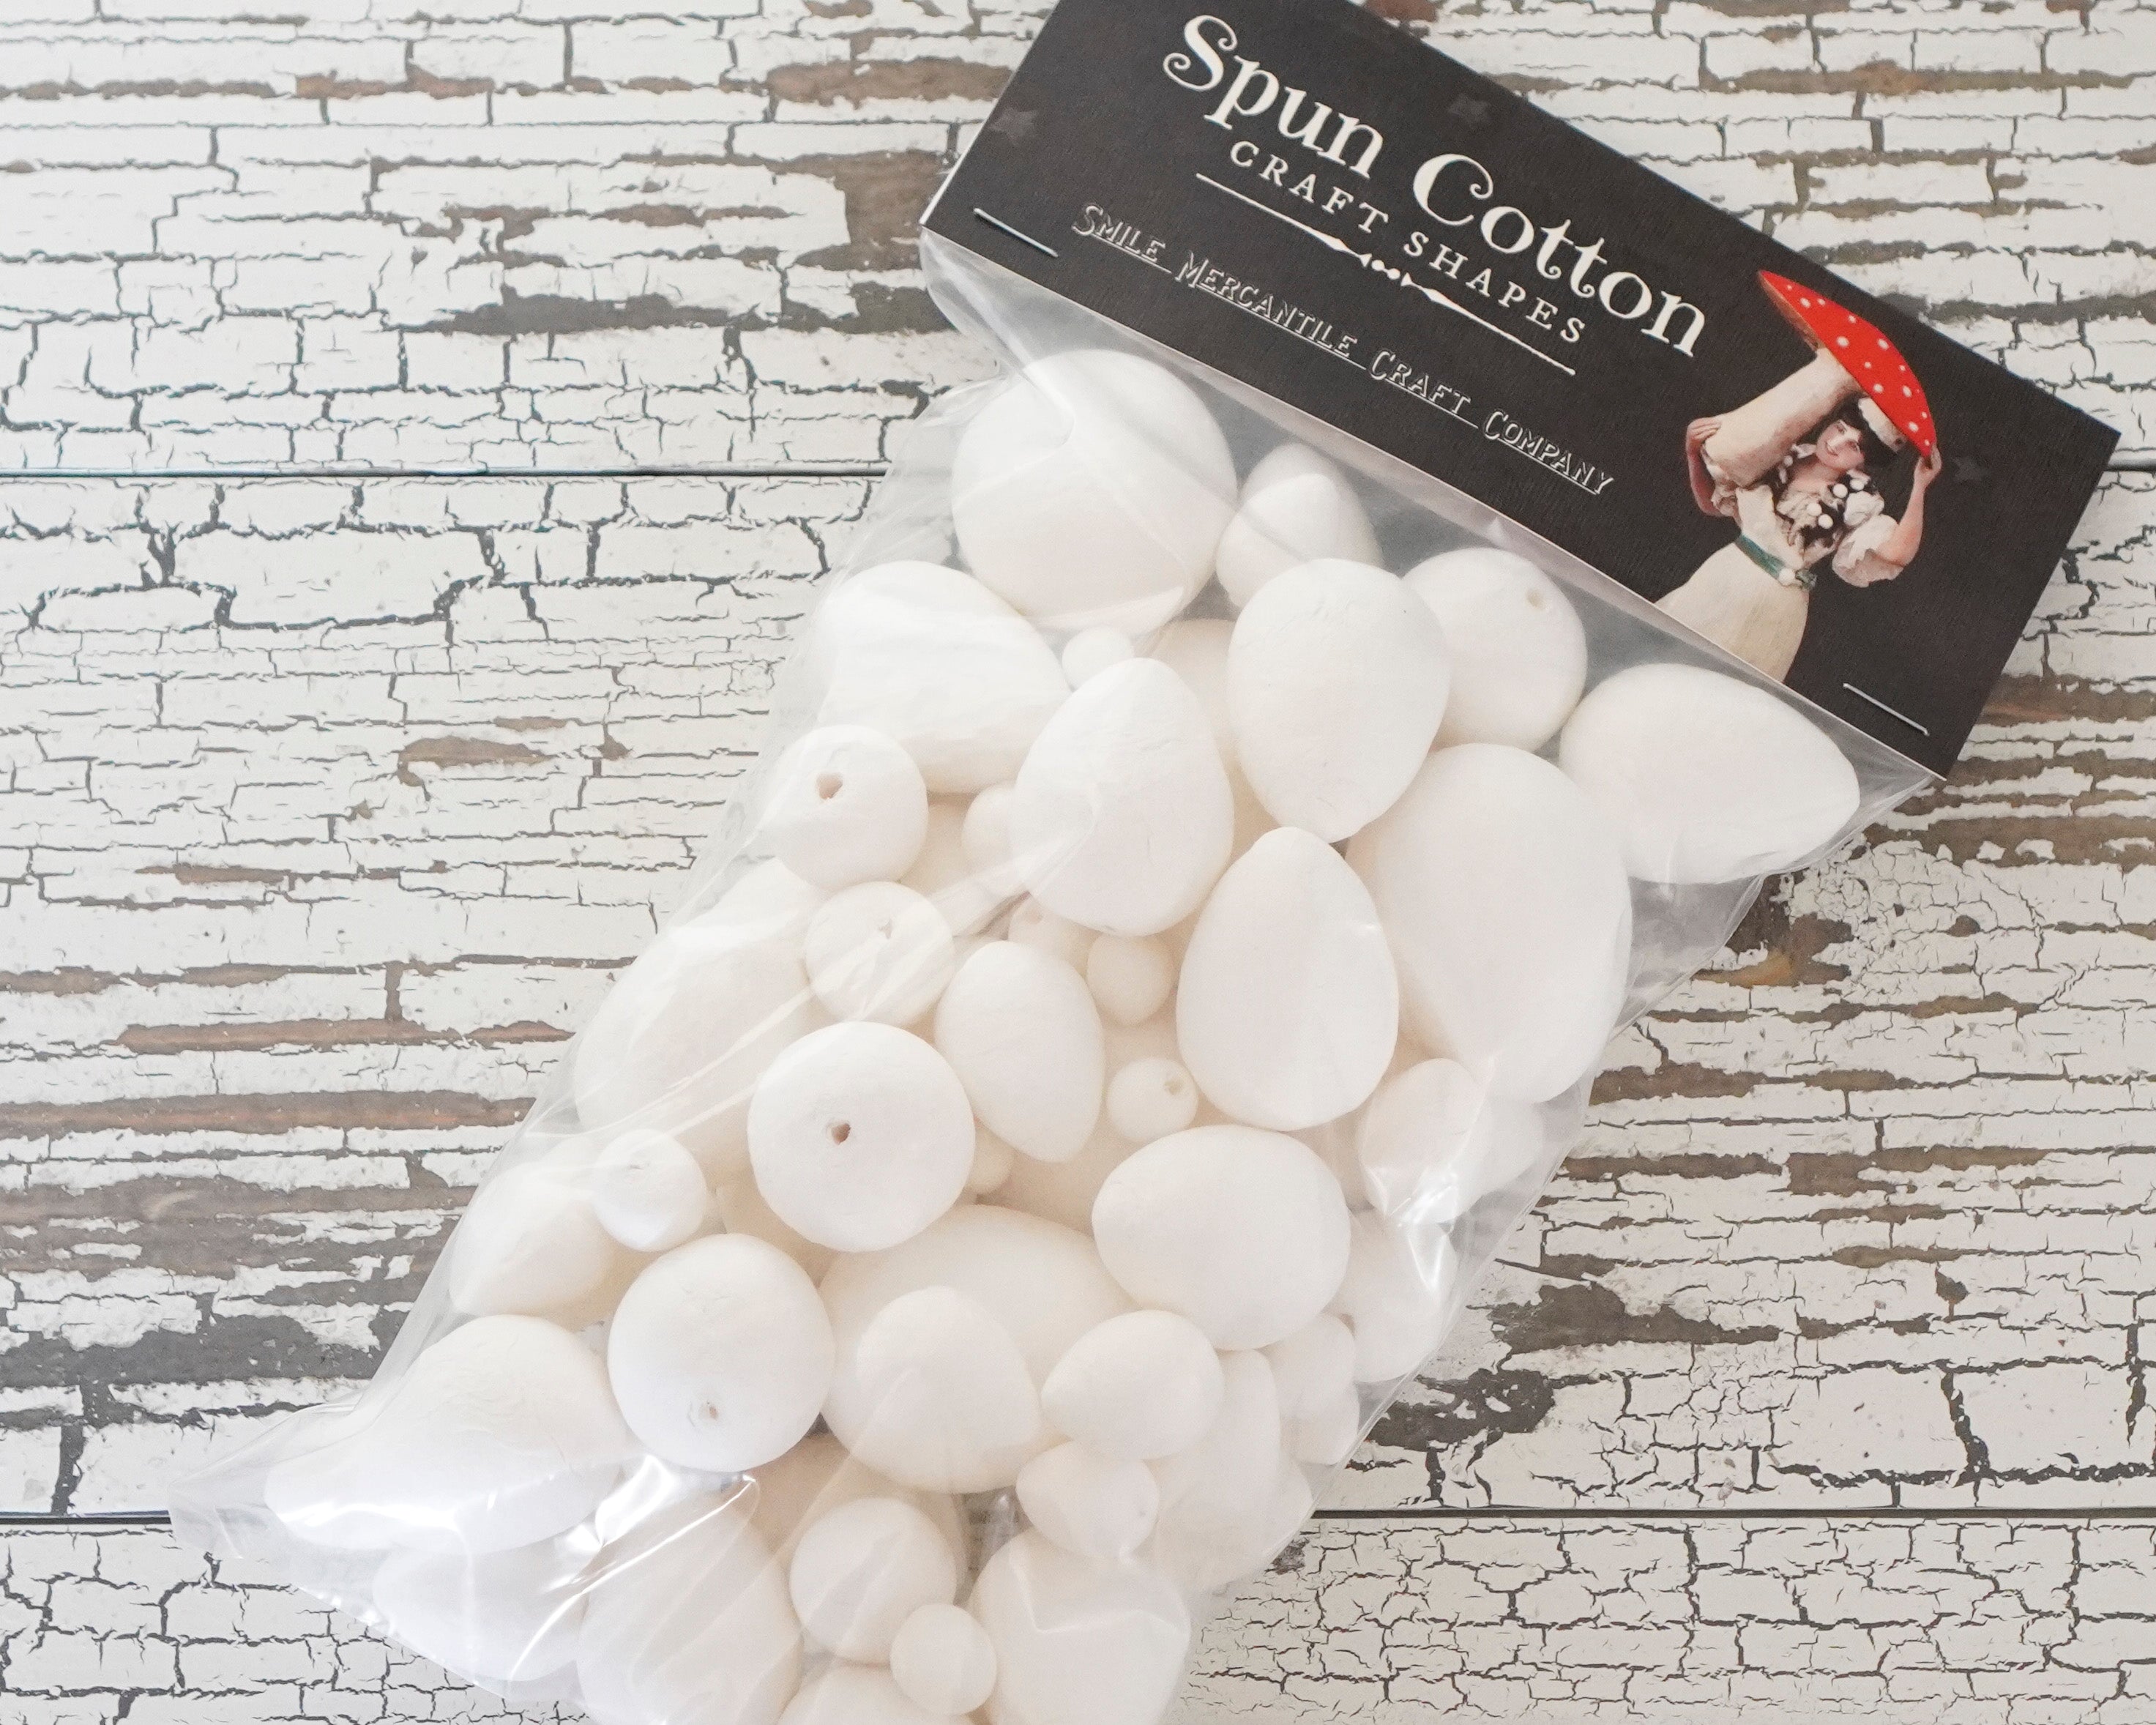 Spun Cotton Eggs Sampler Pack, Mixed-Size Paper Egg Craft Shapes, 100 Pcs.